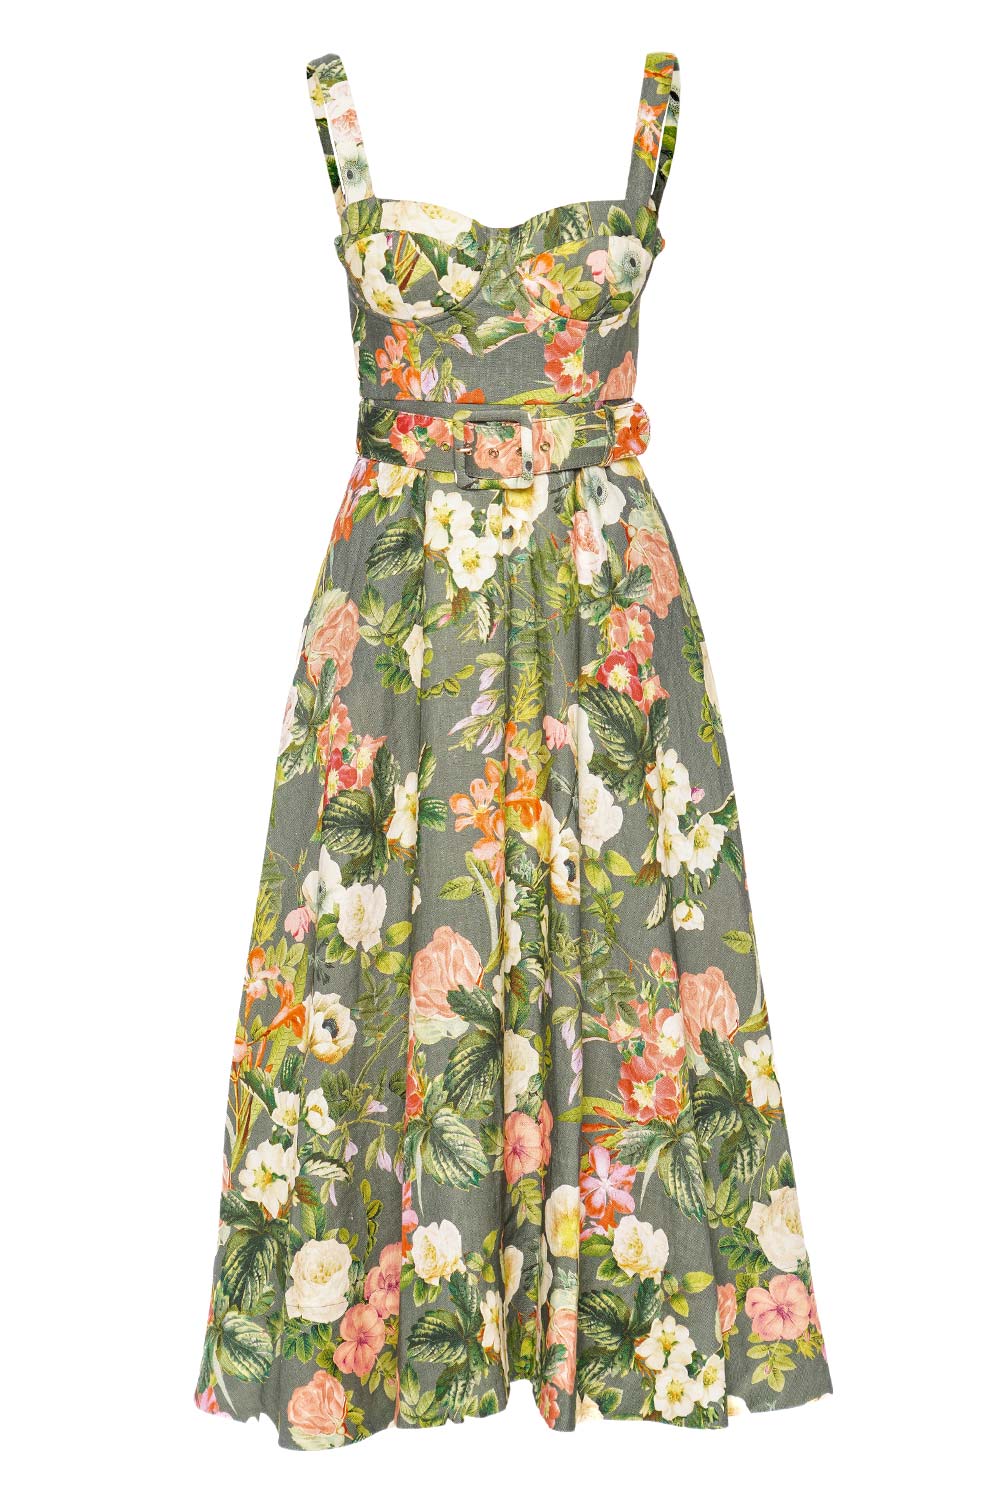 Cara Cara Calypso Bustier Belted Floral Midi Dress